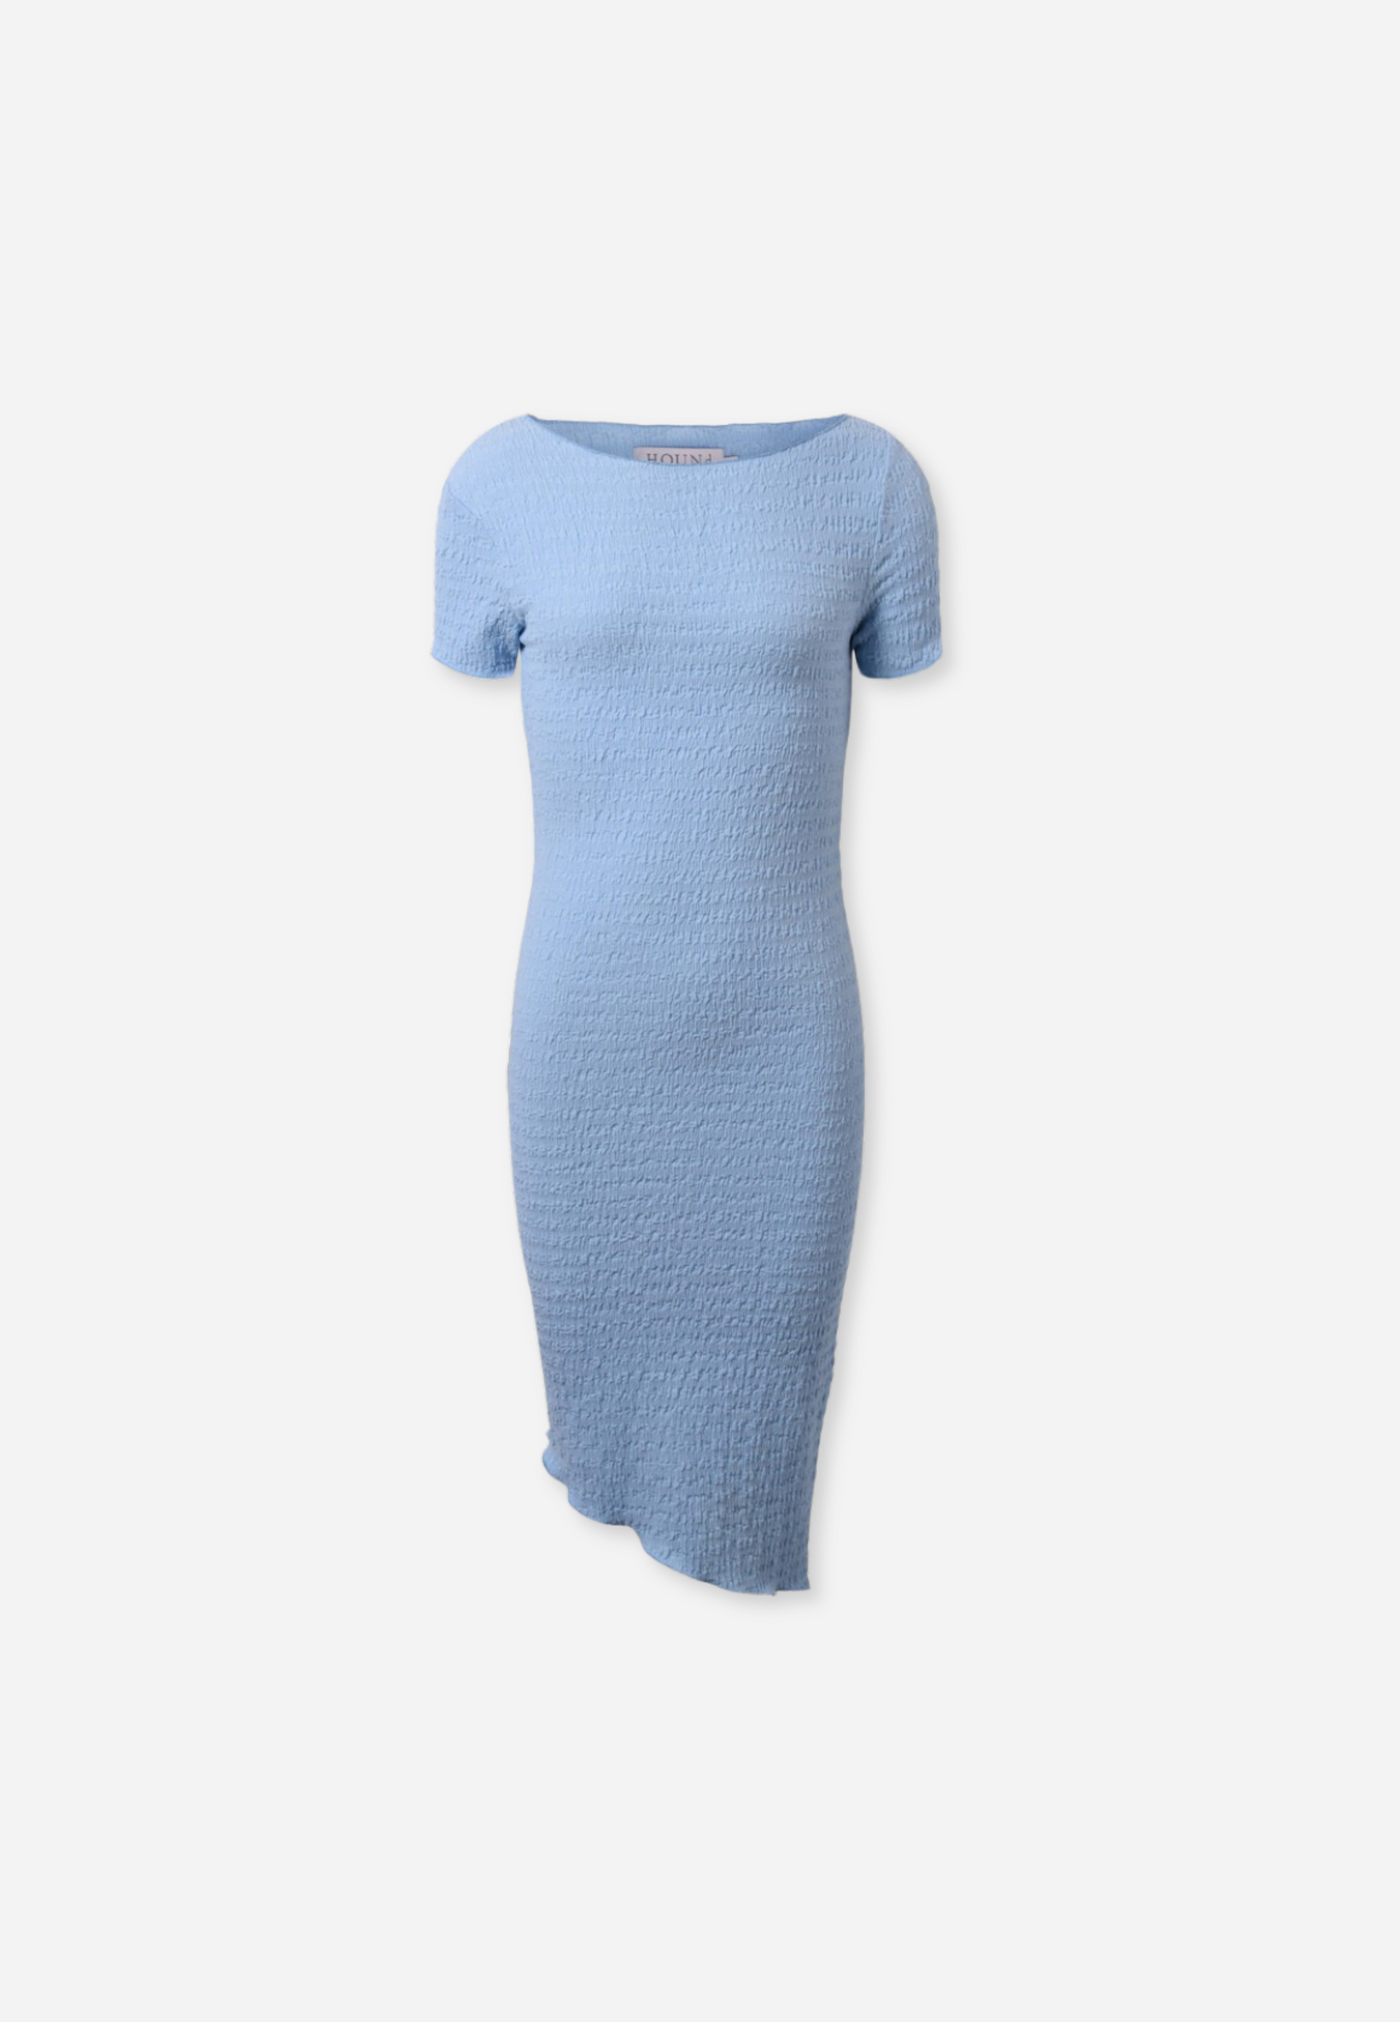 ASYMETRIC DRESS - LIGHT BLUE